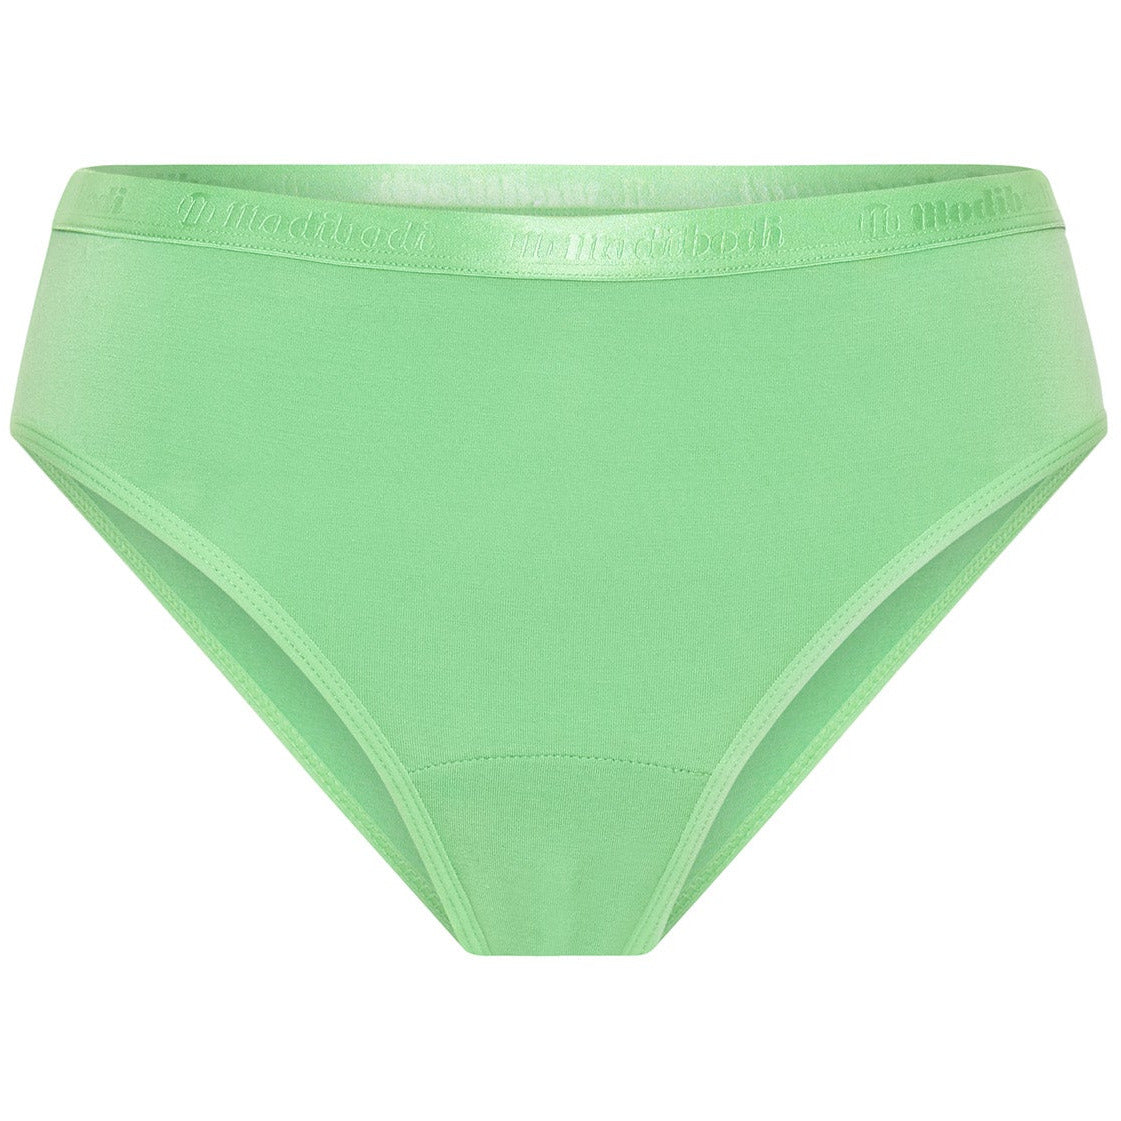 Green Modibodi Classic Underwear